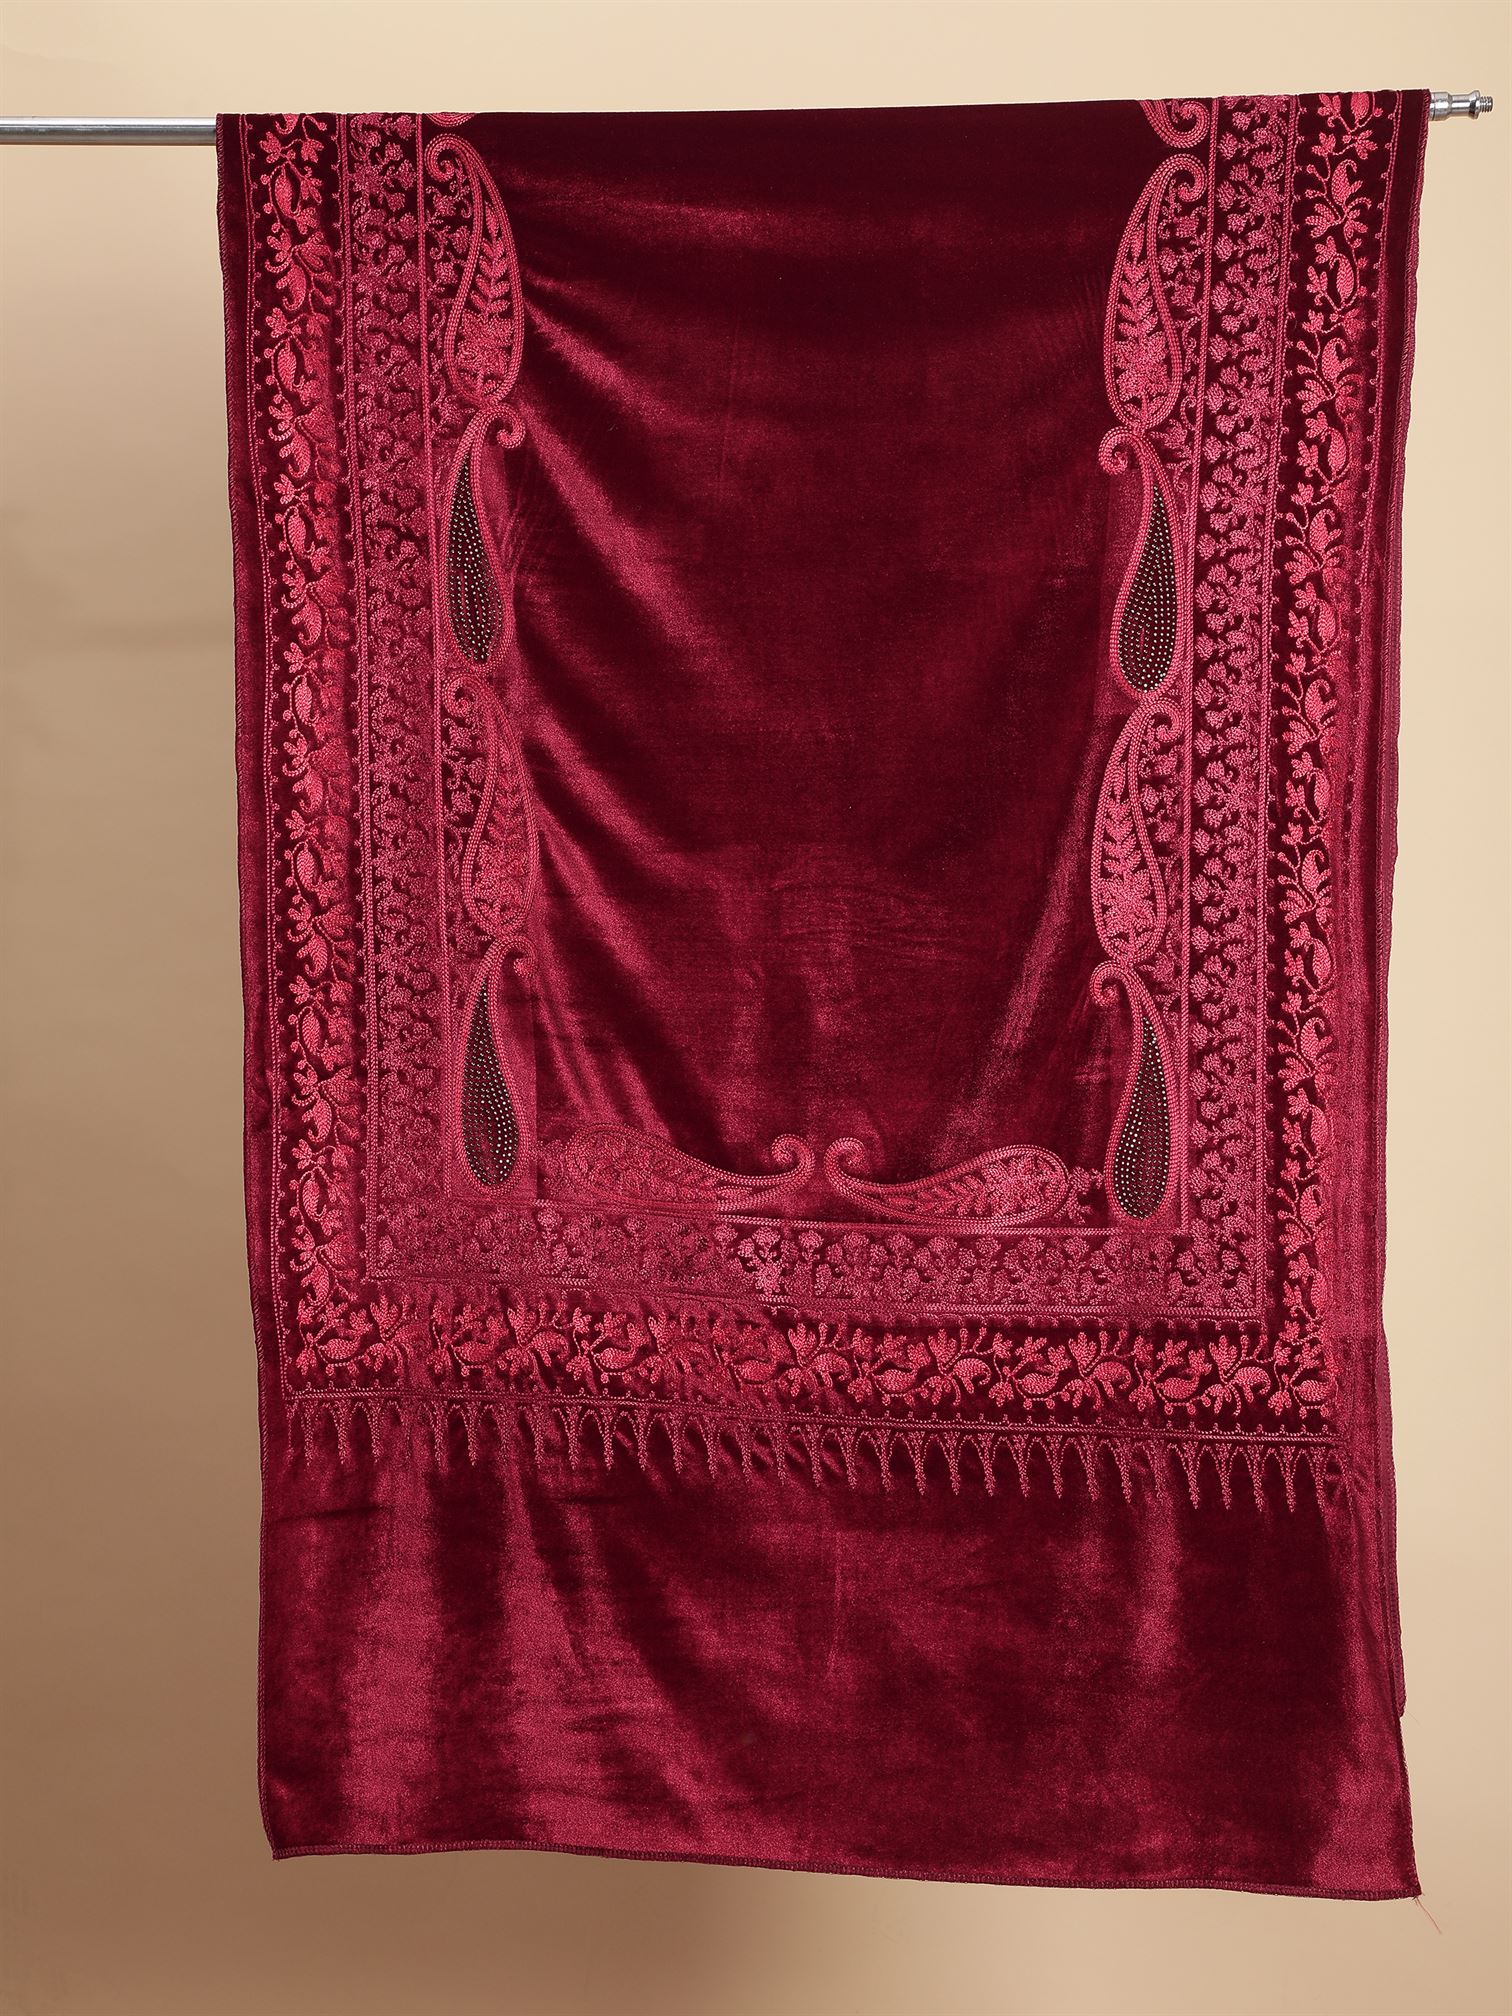 red-embroidered-velvet-shawl-mchsvd1649-moda-chales-6